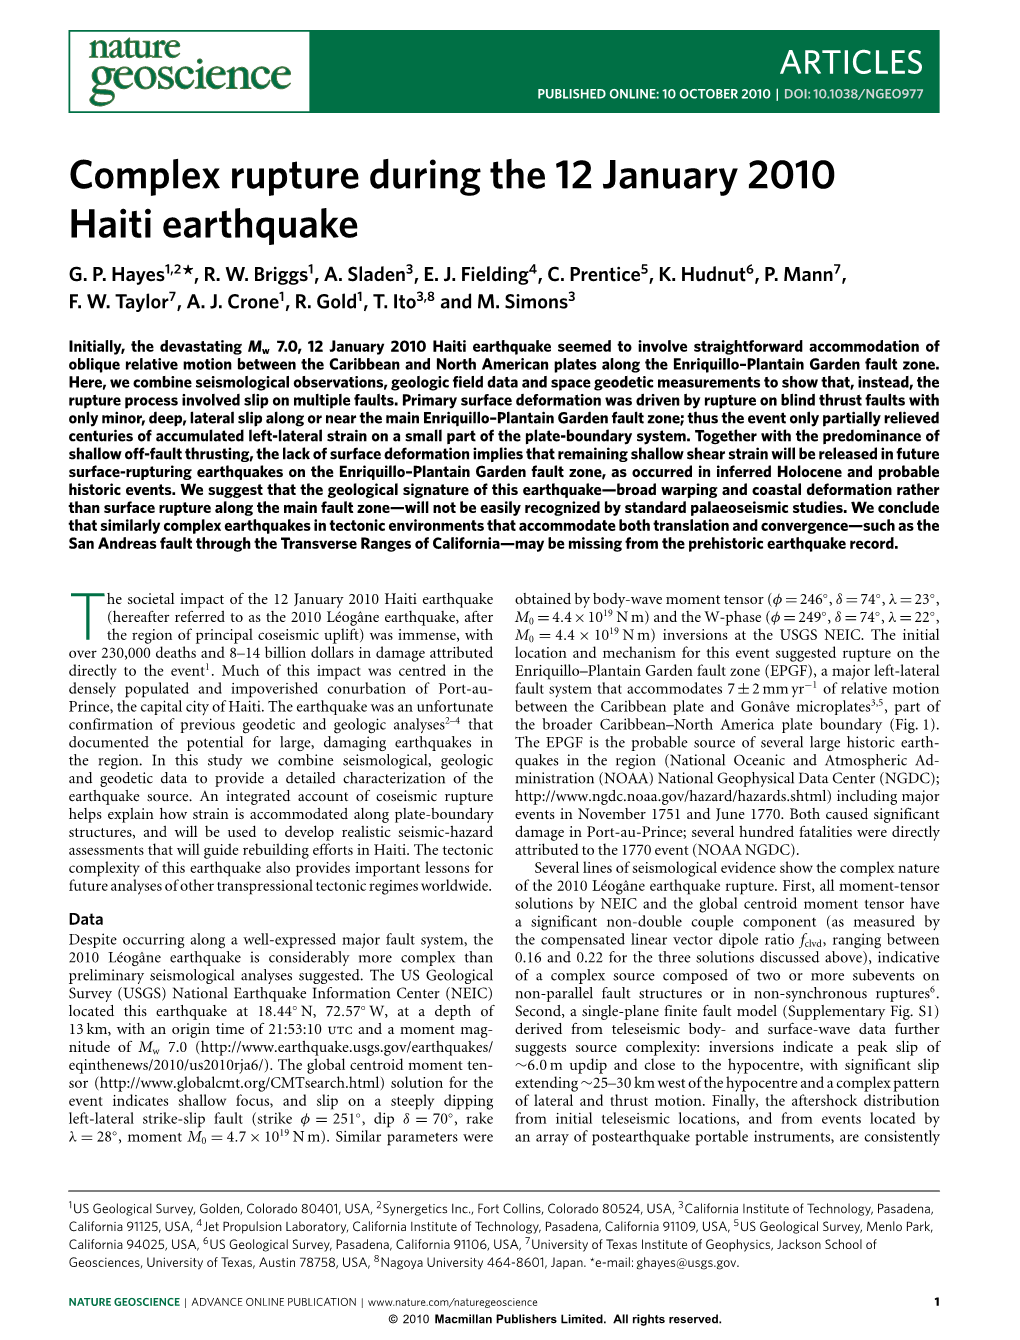 Complex Rupture During the 12 January 2010 Haiti Earthquake G